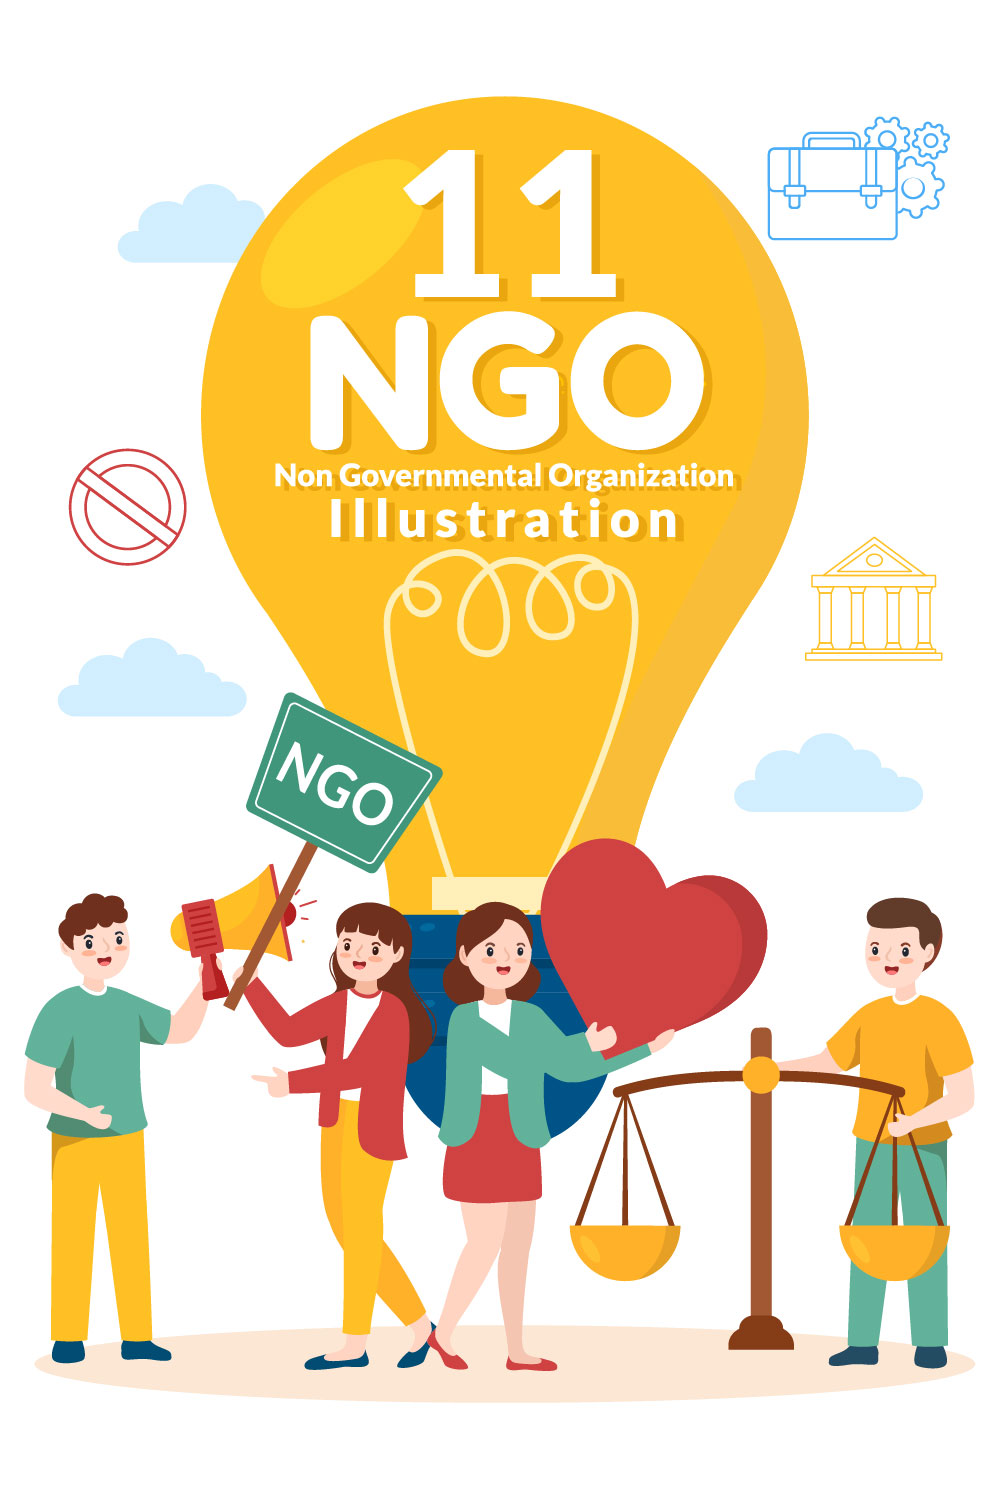 11 NGO or Non-Governmental Organization Illustration pinterest image.